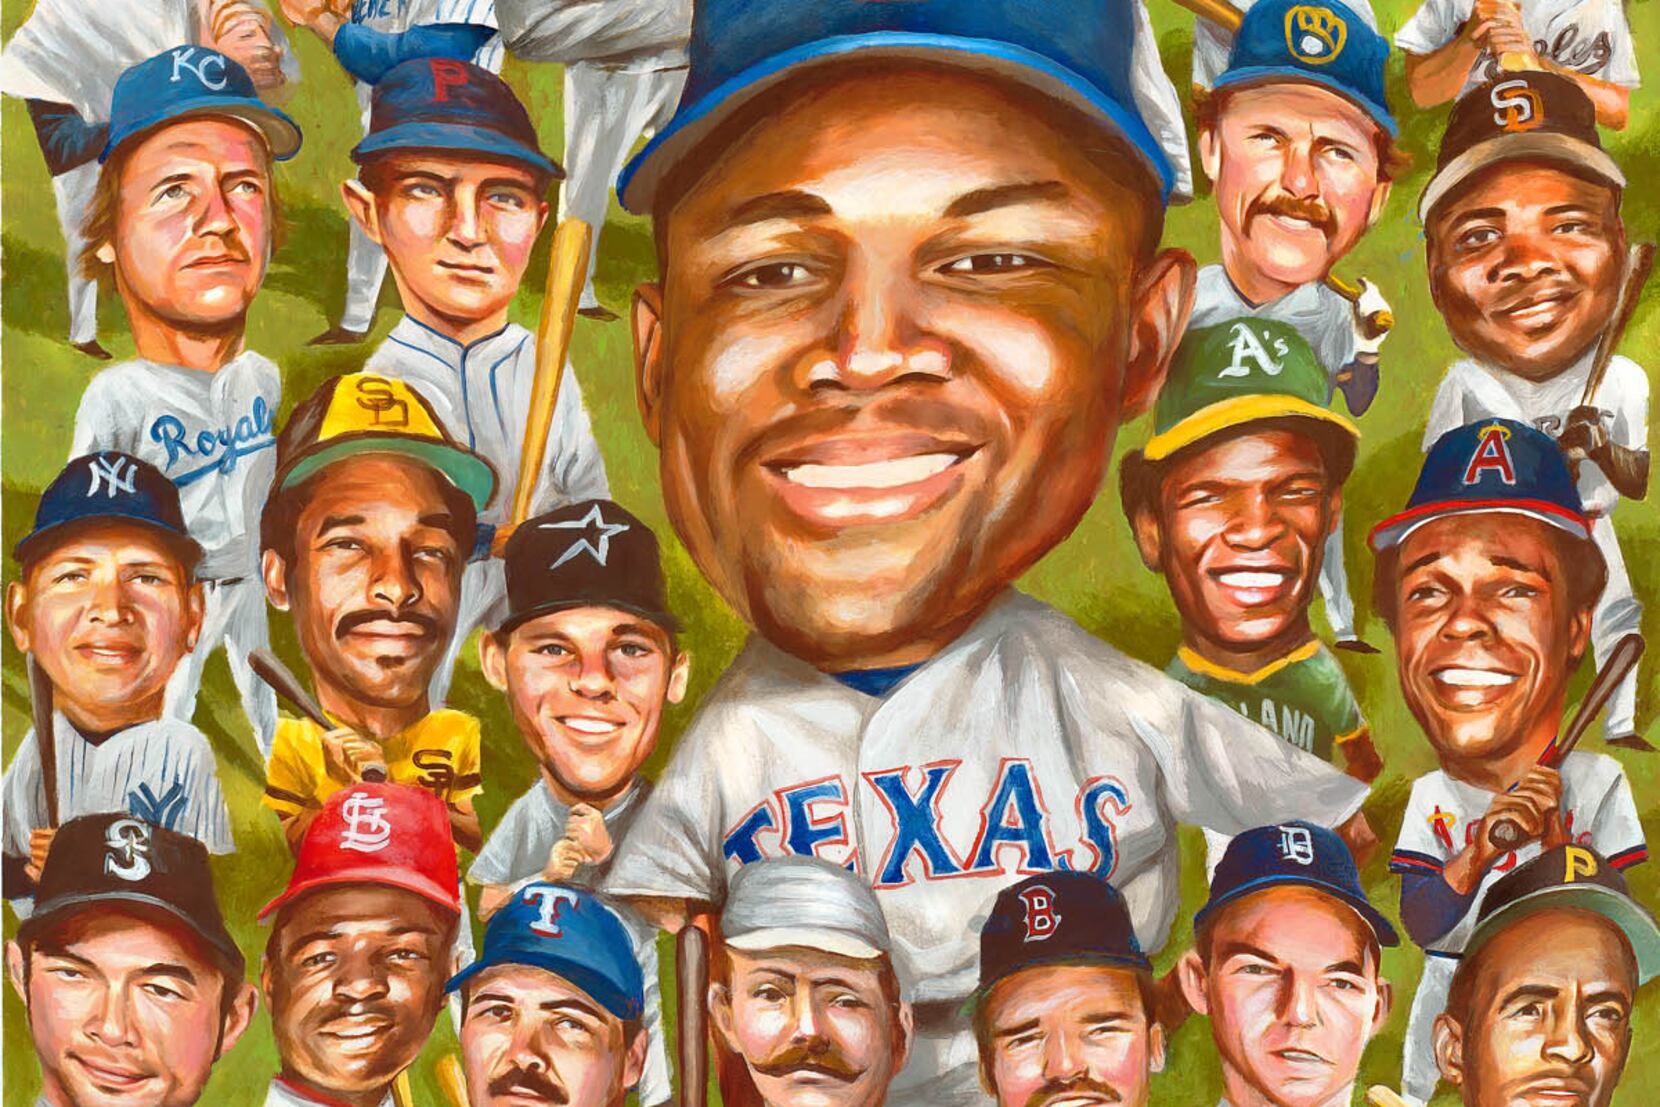 Texas Rangers - 3,000! #Beltre3k